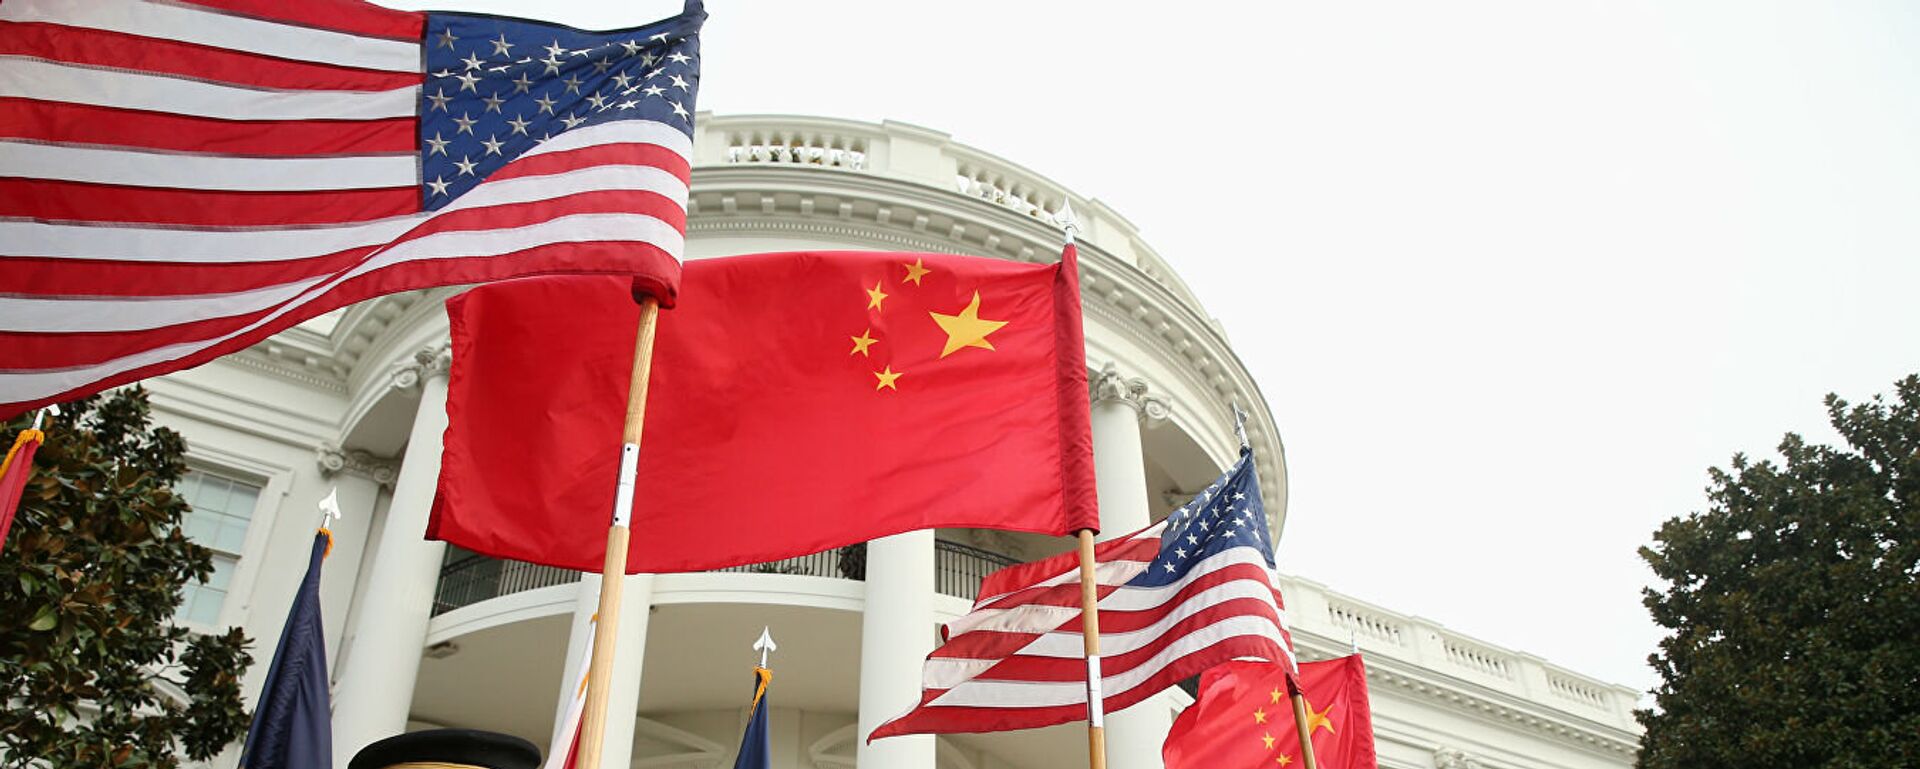 Почетный караул у Белого дома в Вашингтоне с флагами США и Китая.  - 俄罗斯卫星通讯社, 1920, 15.09.2021